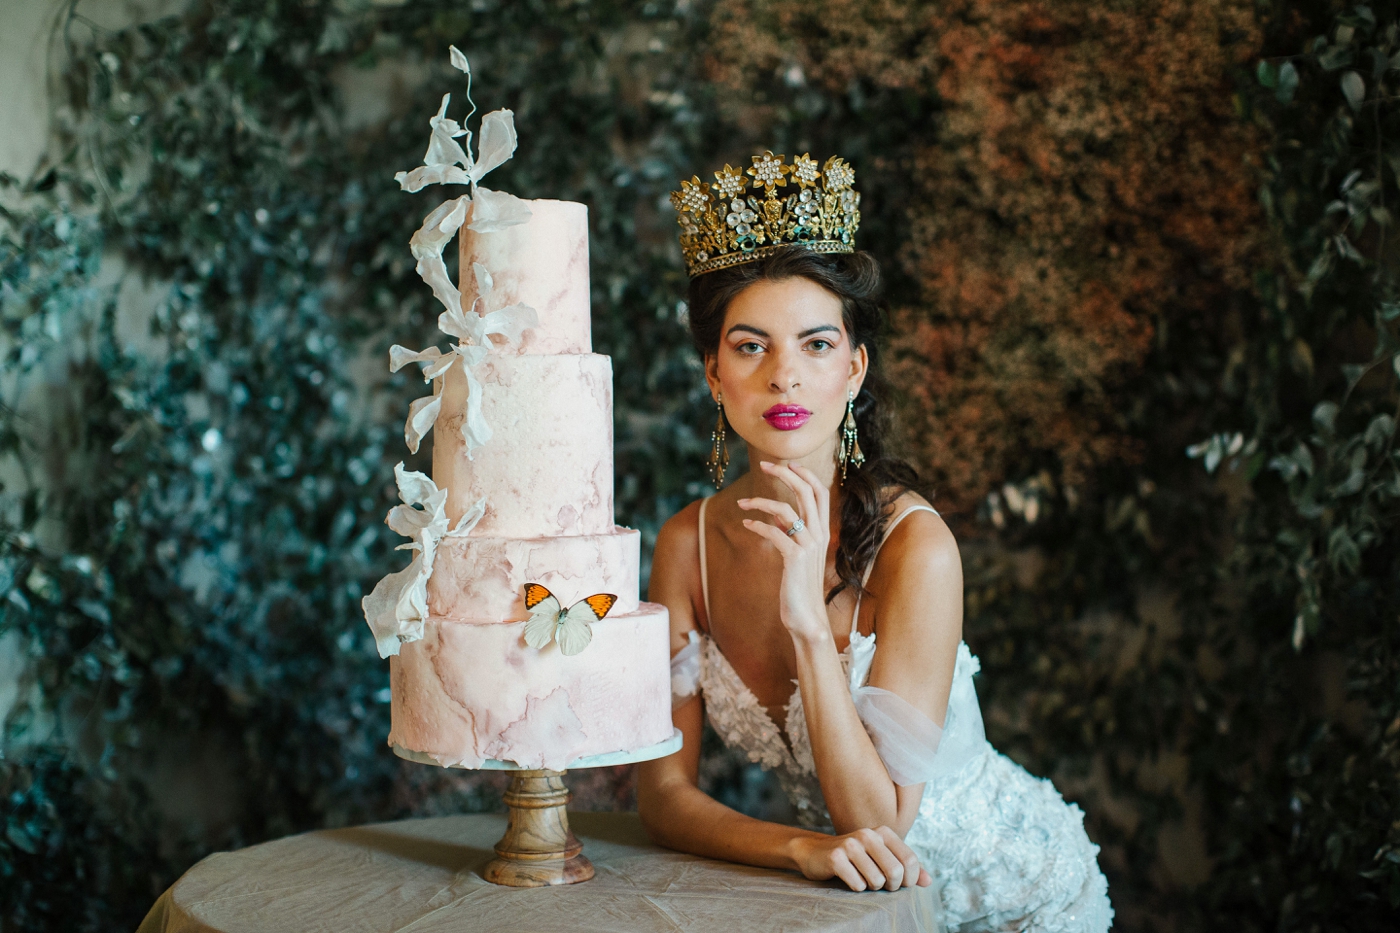 Luxury wedding cake by Vanilla And The Bean for a Savannah wedding